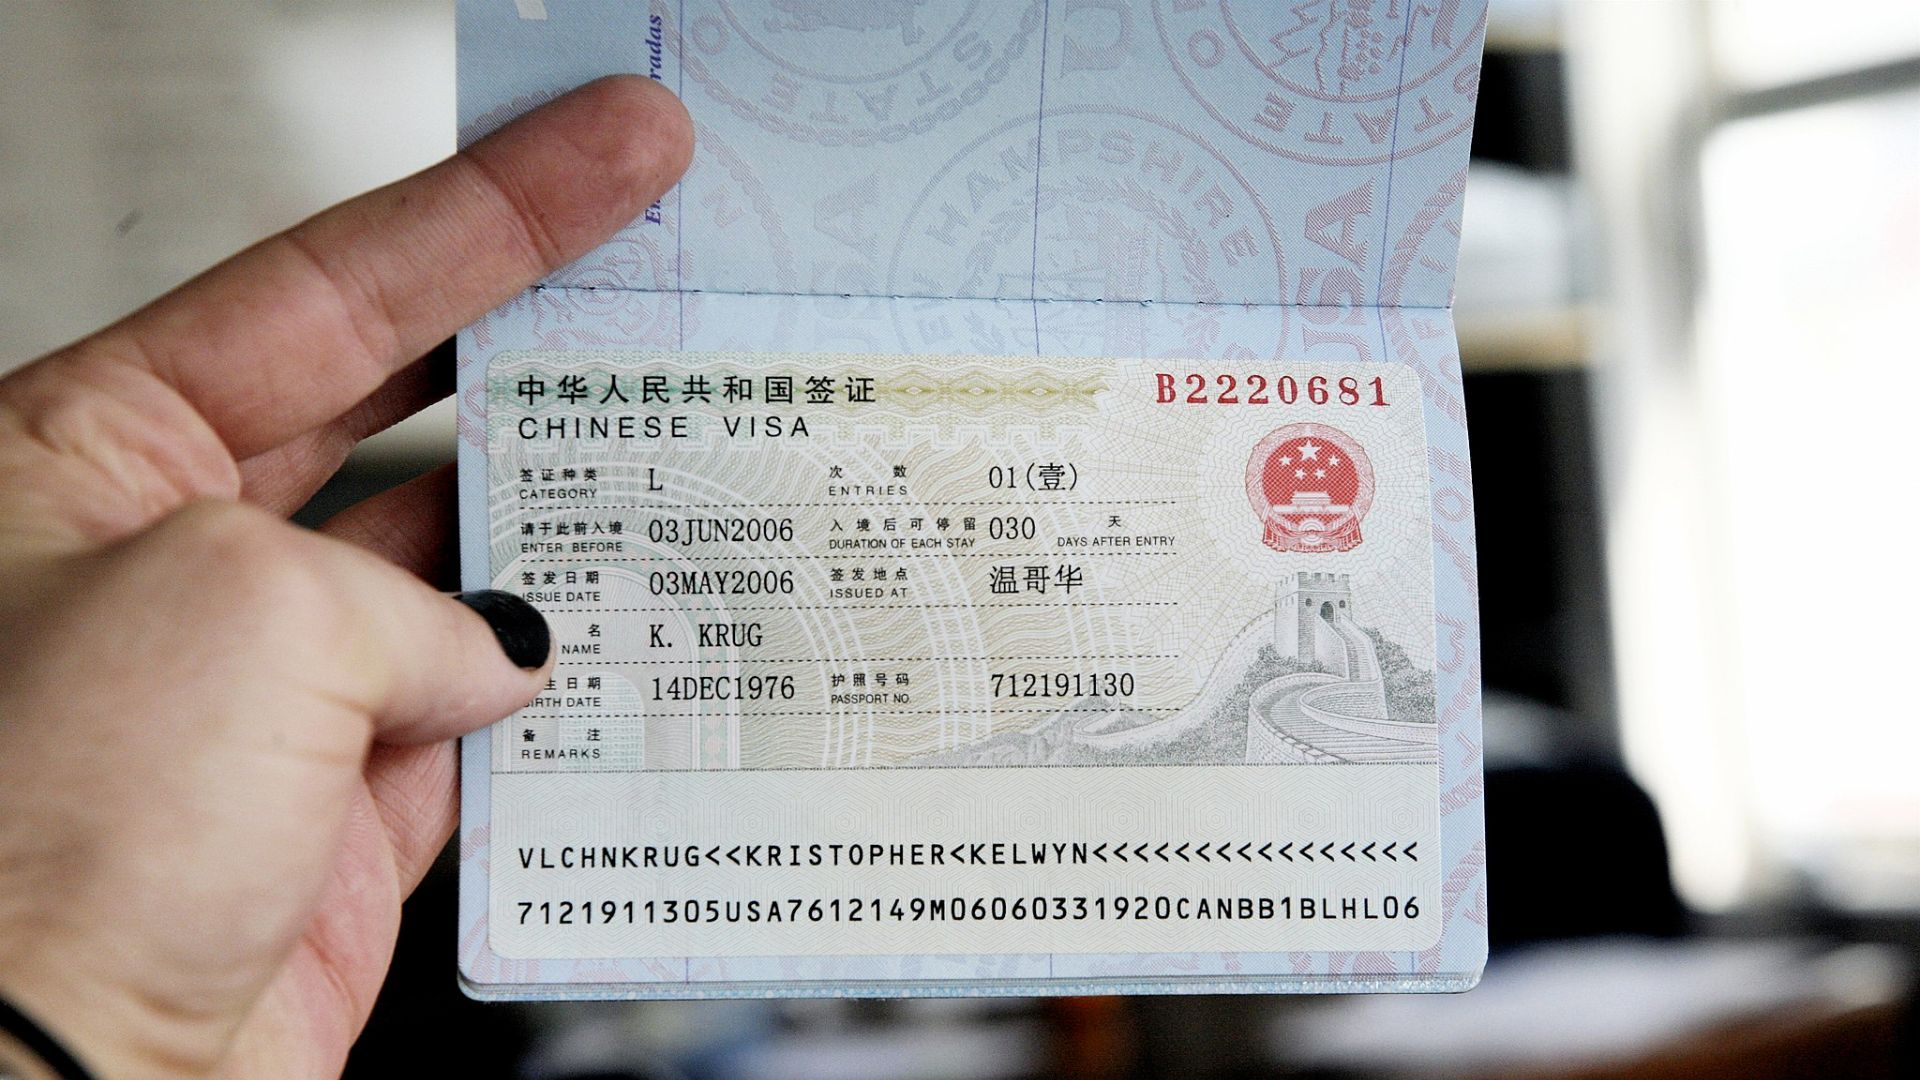 travel agency singapore for china visa